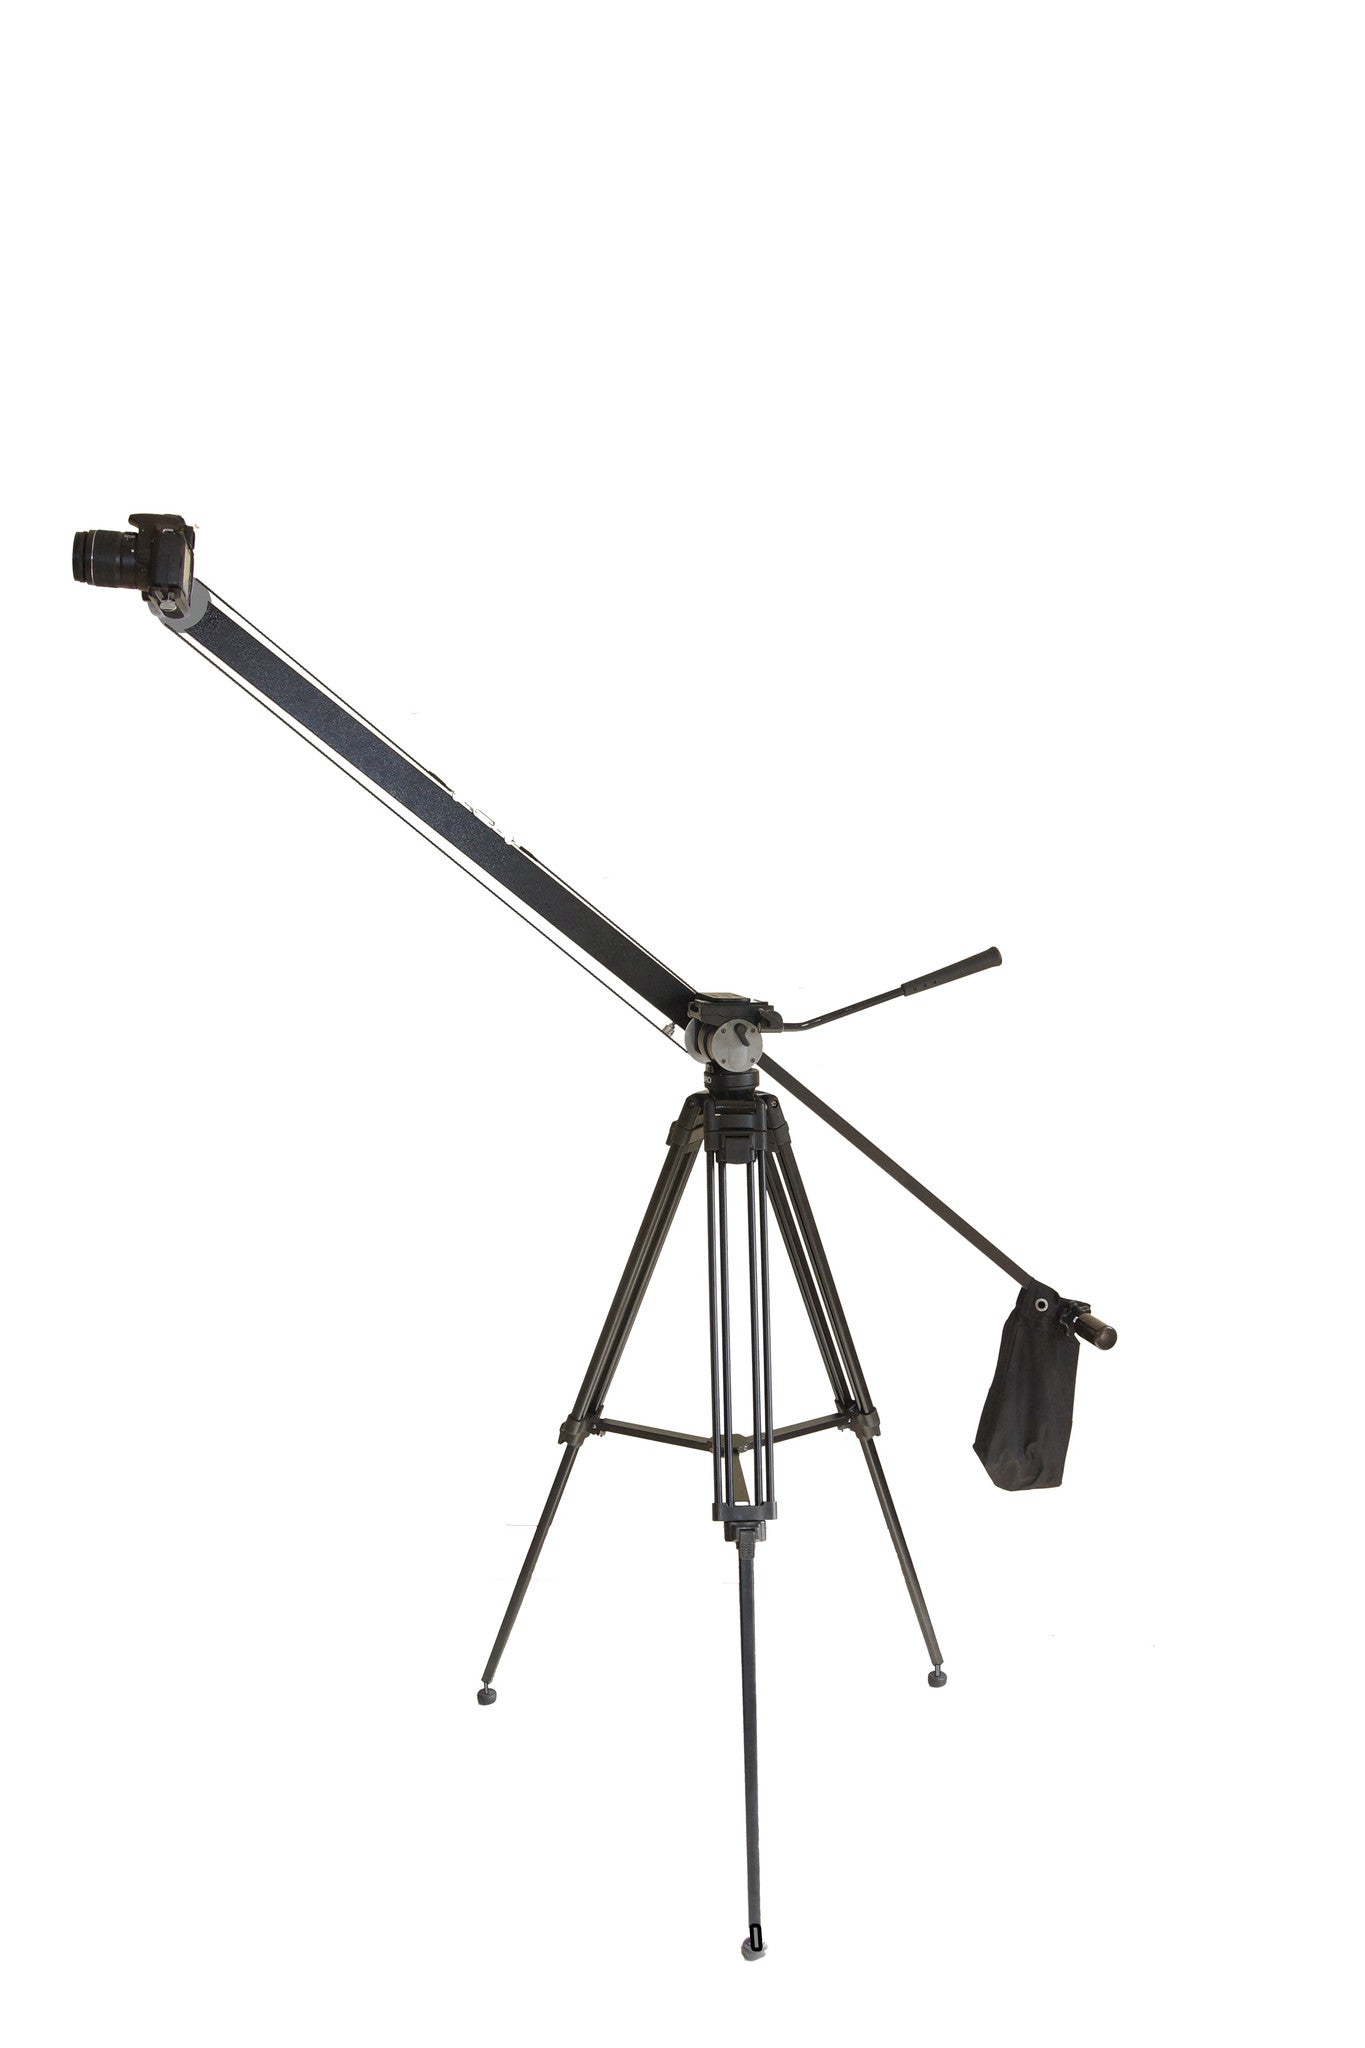 BackPacker UltraLite - 5 foot Lightweight Camera Jib with Bag Set Kit